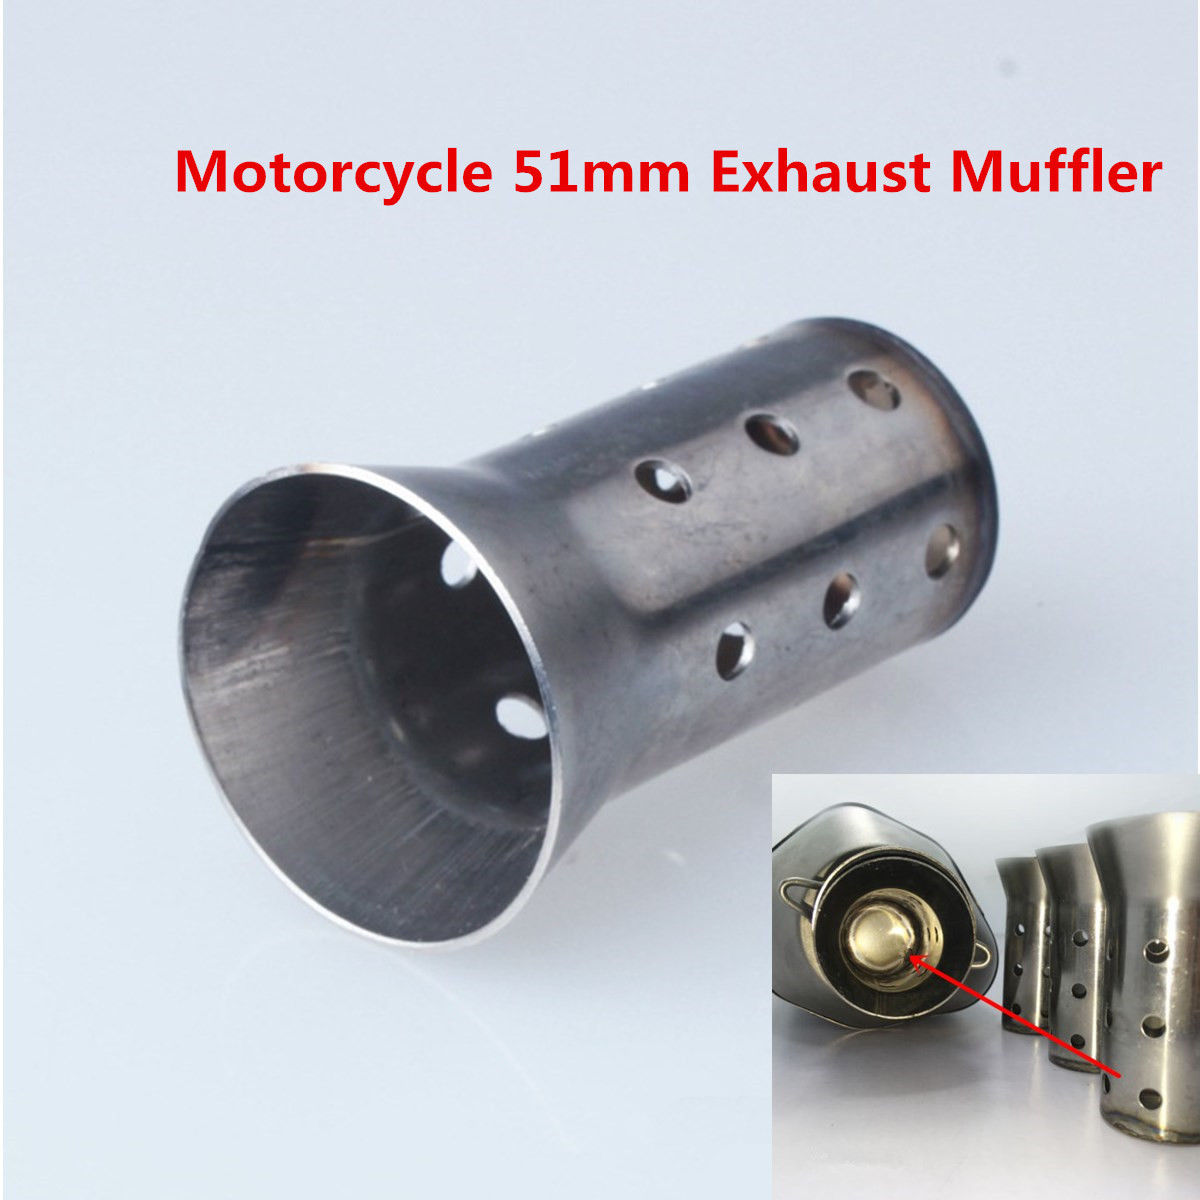 1pcs 51mm Motorcycle Exhaust Muffler Stainless Baffle DB Killer Silencer Mu...